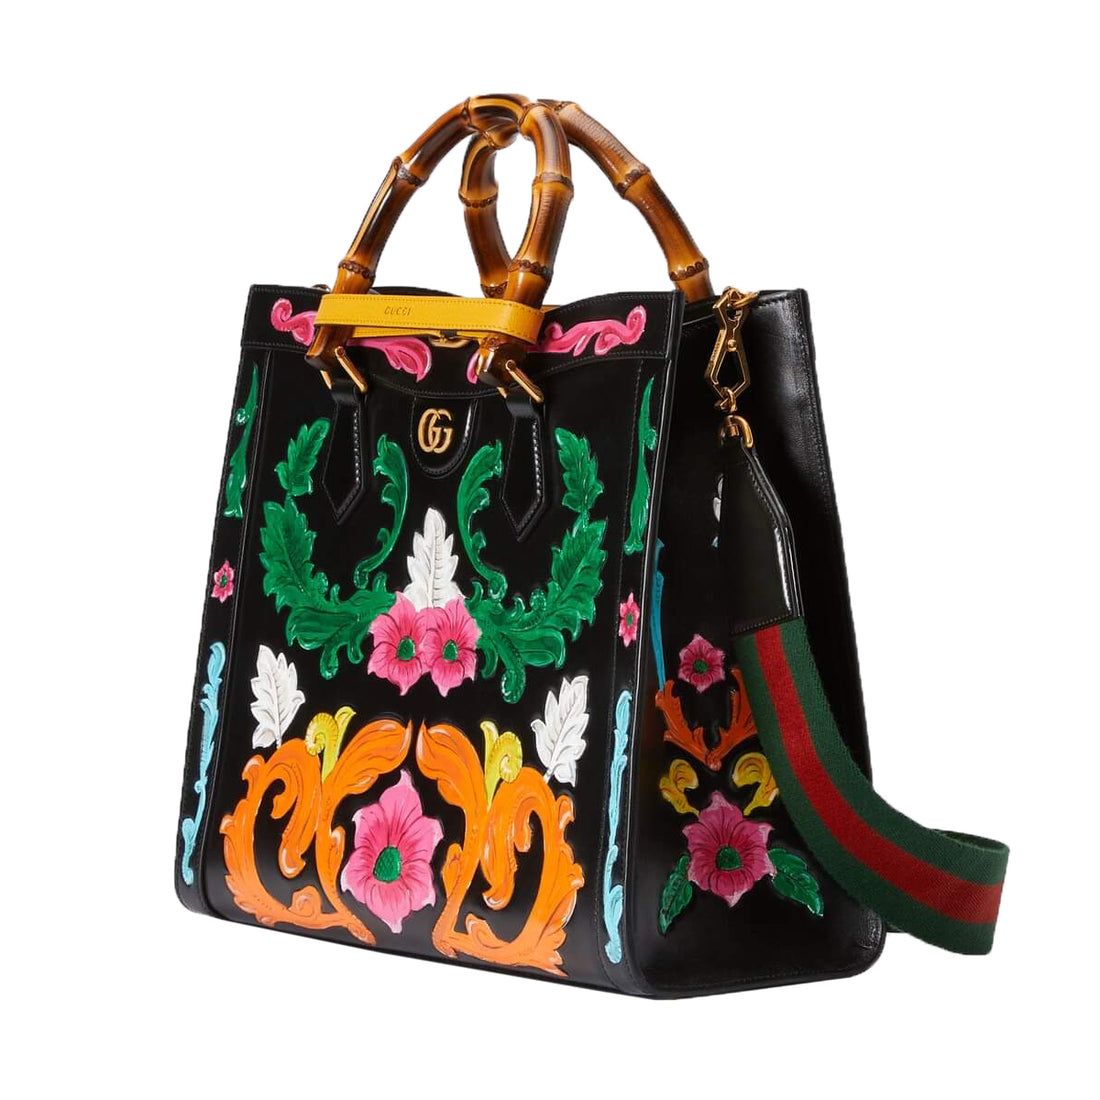 Gucci Diana Medium Tote Bag Limited Edition